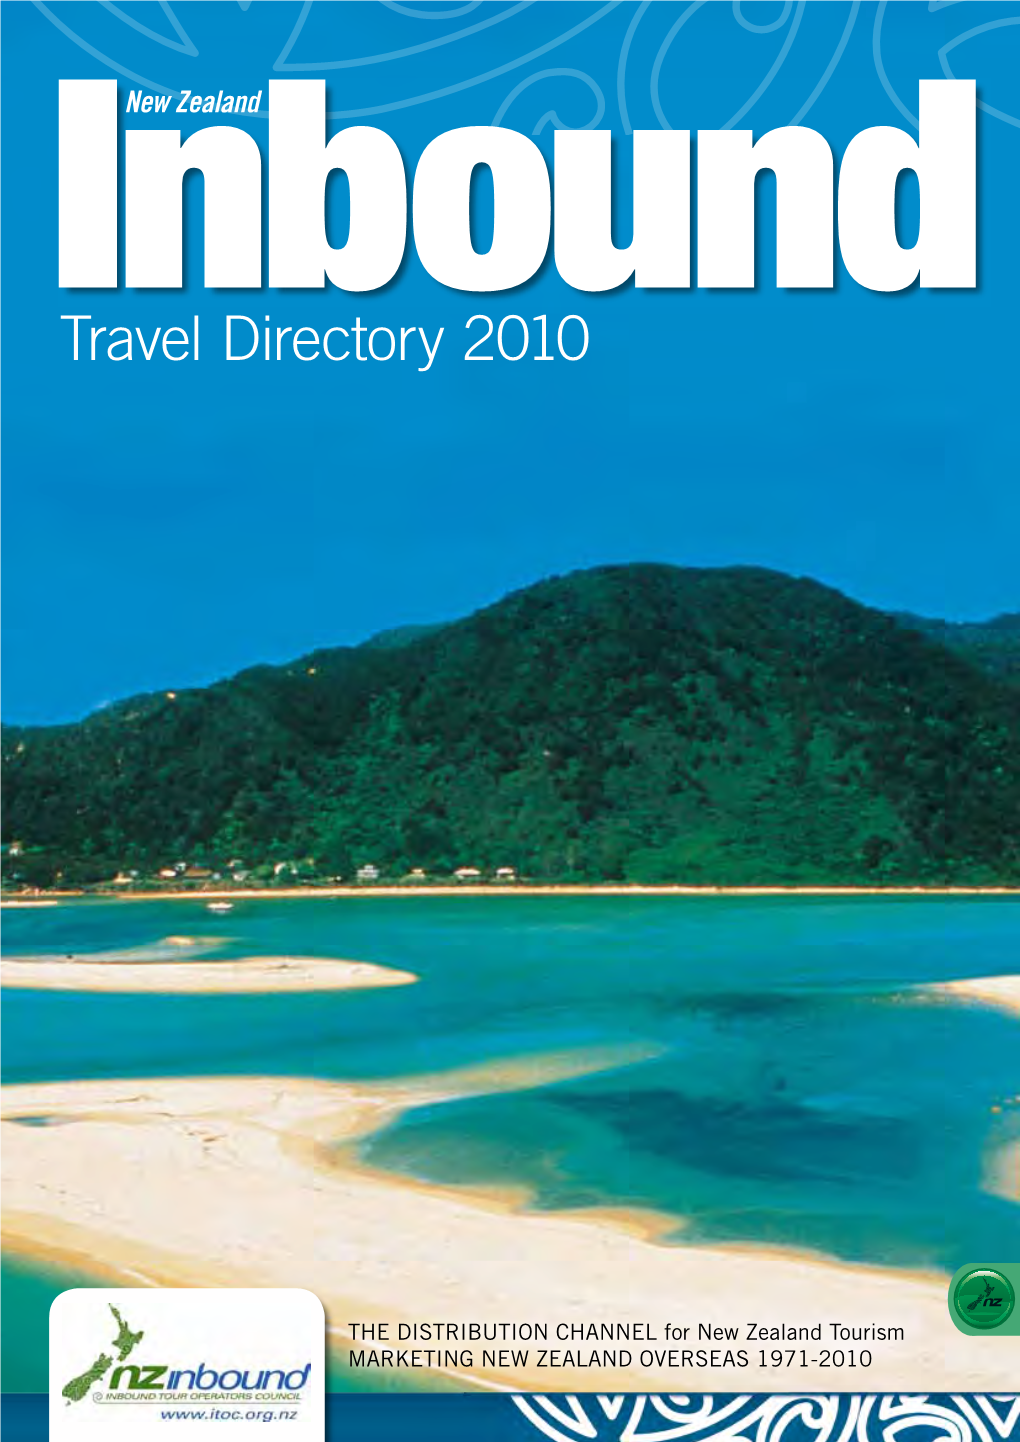 Travel Directory 2010